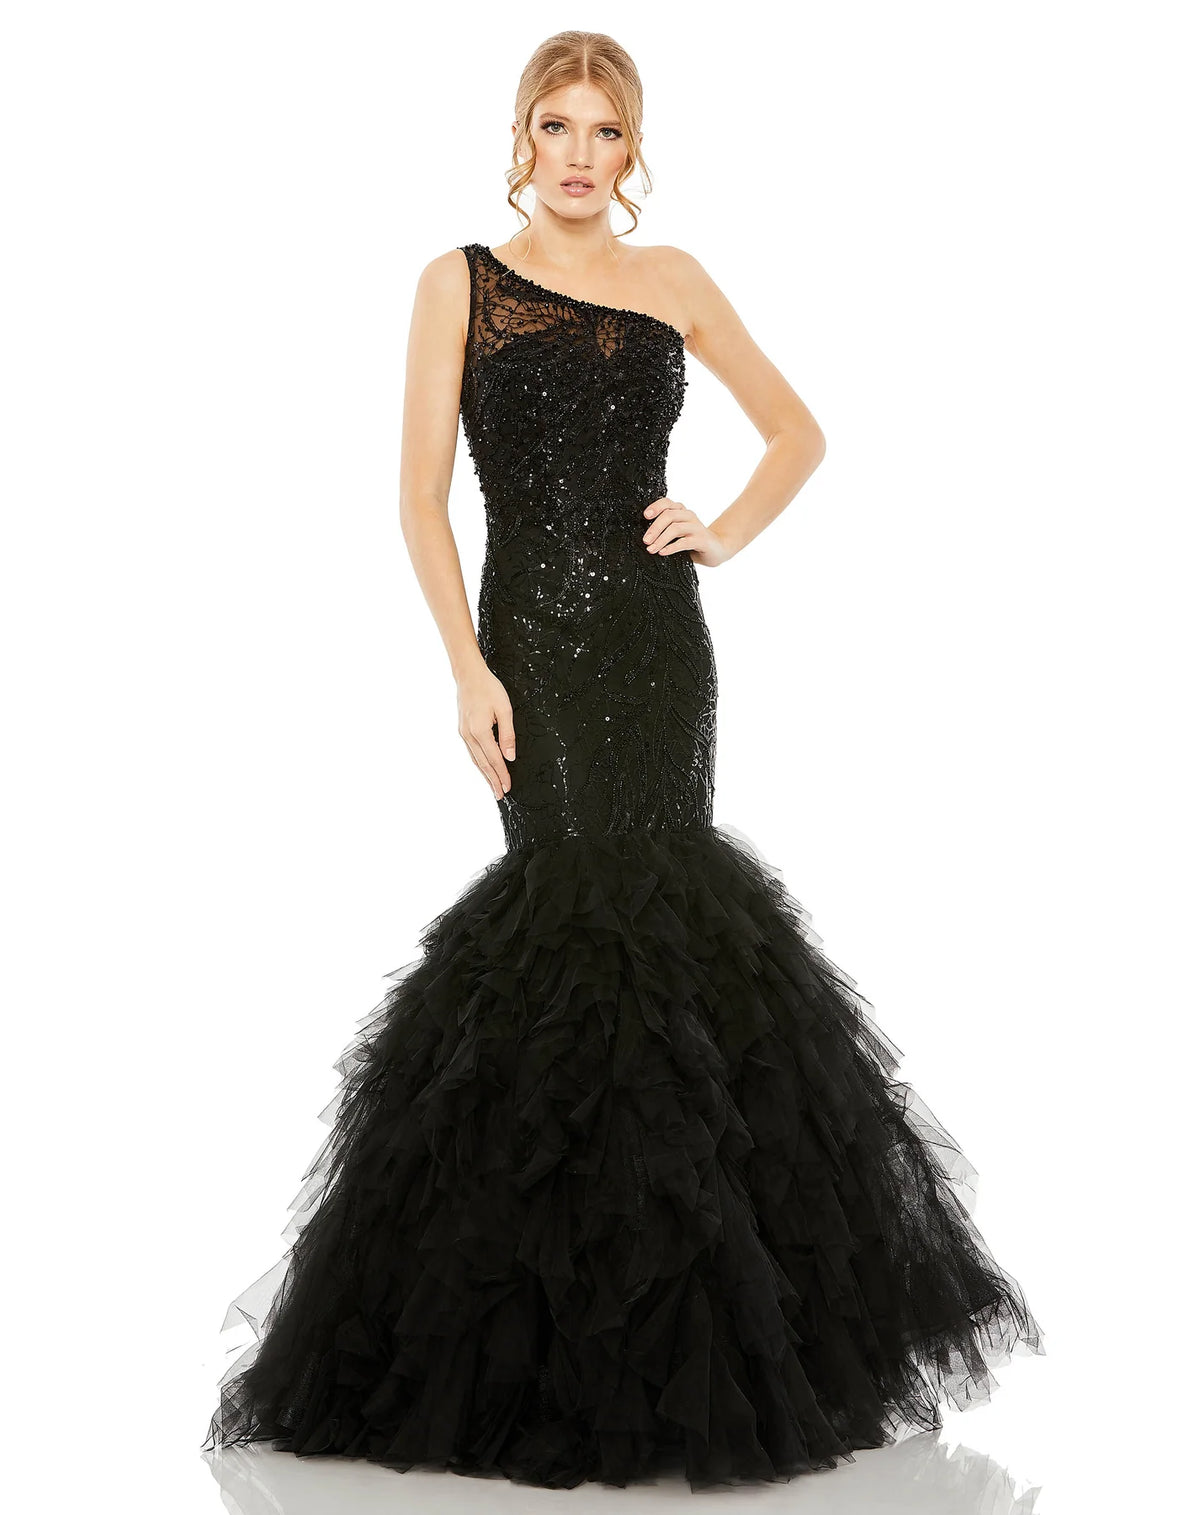 Stunning Black Sequin Overlay Mermaid Dress by Mac Duggal - Style 20545